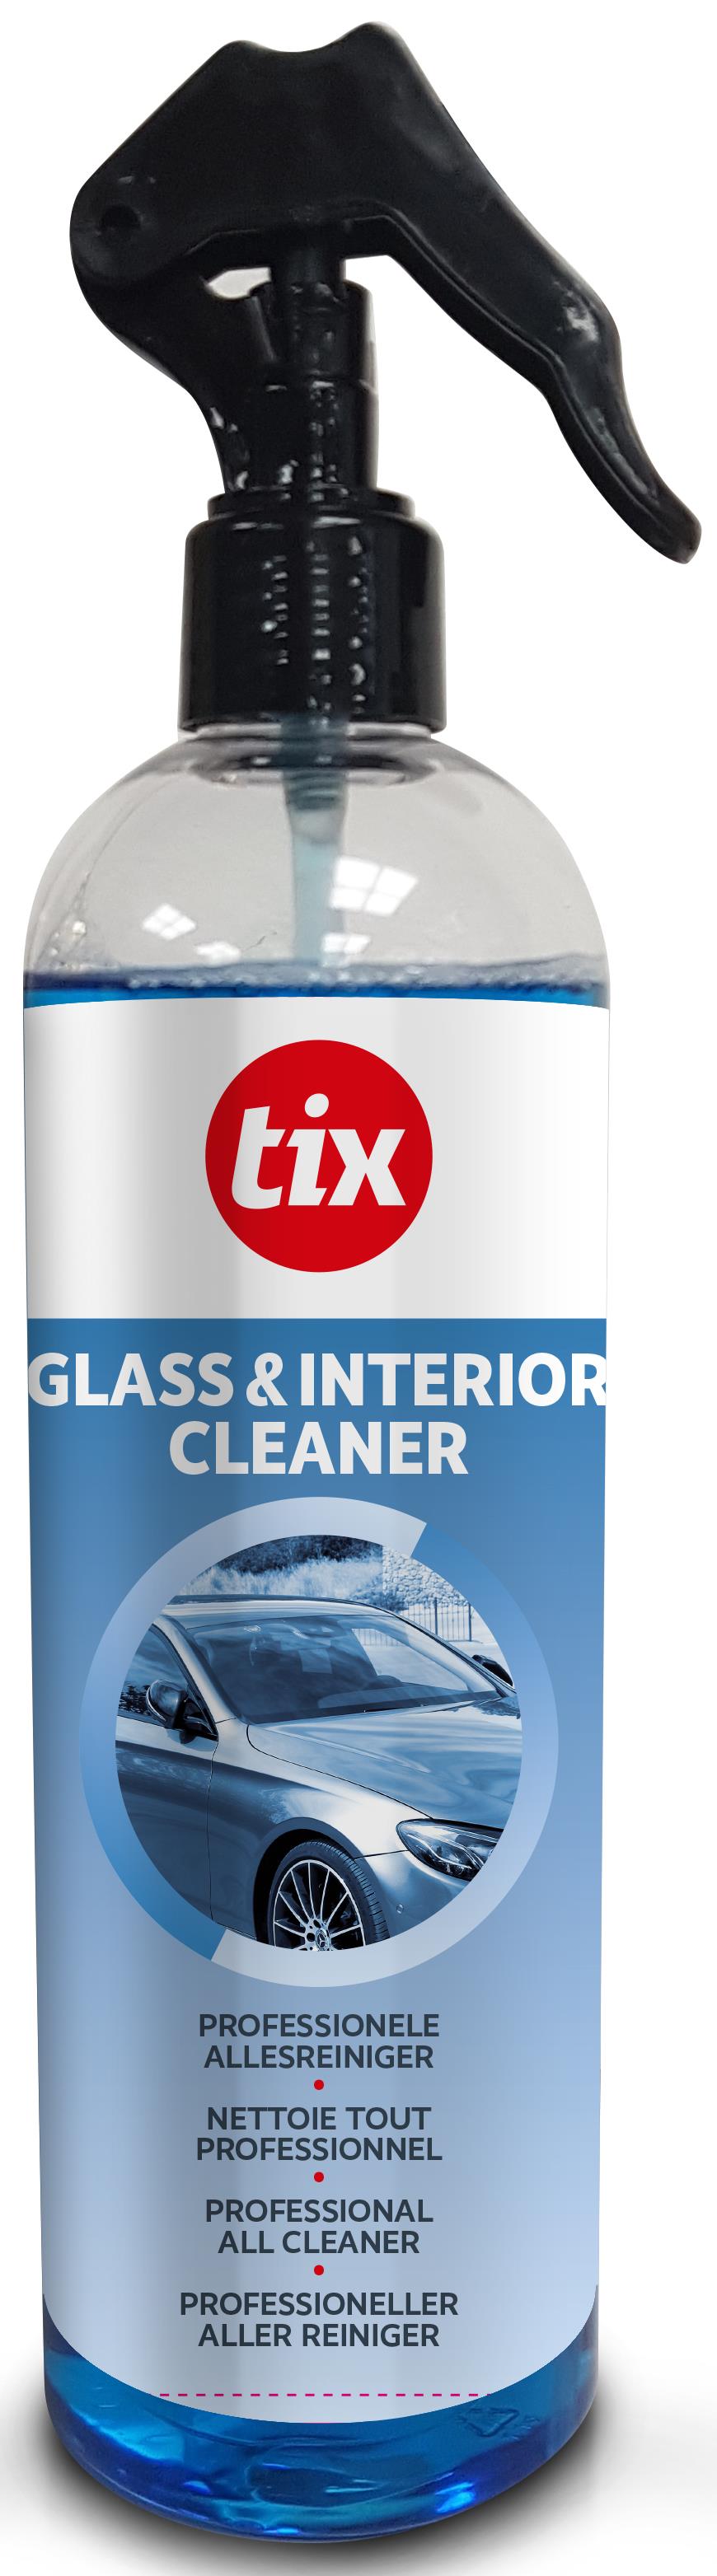 Tix glass cleaner_1541.jpg